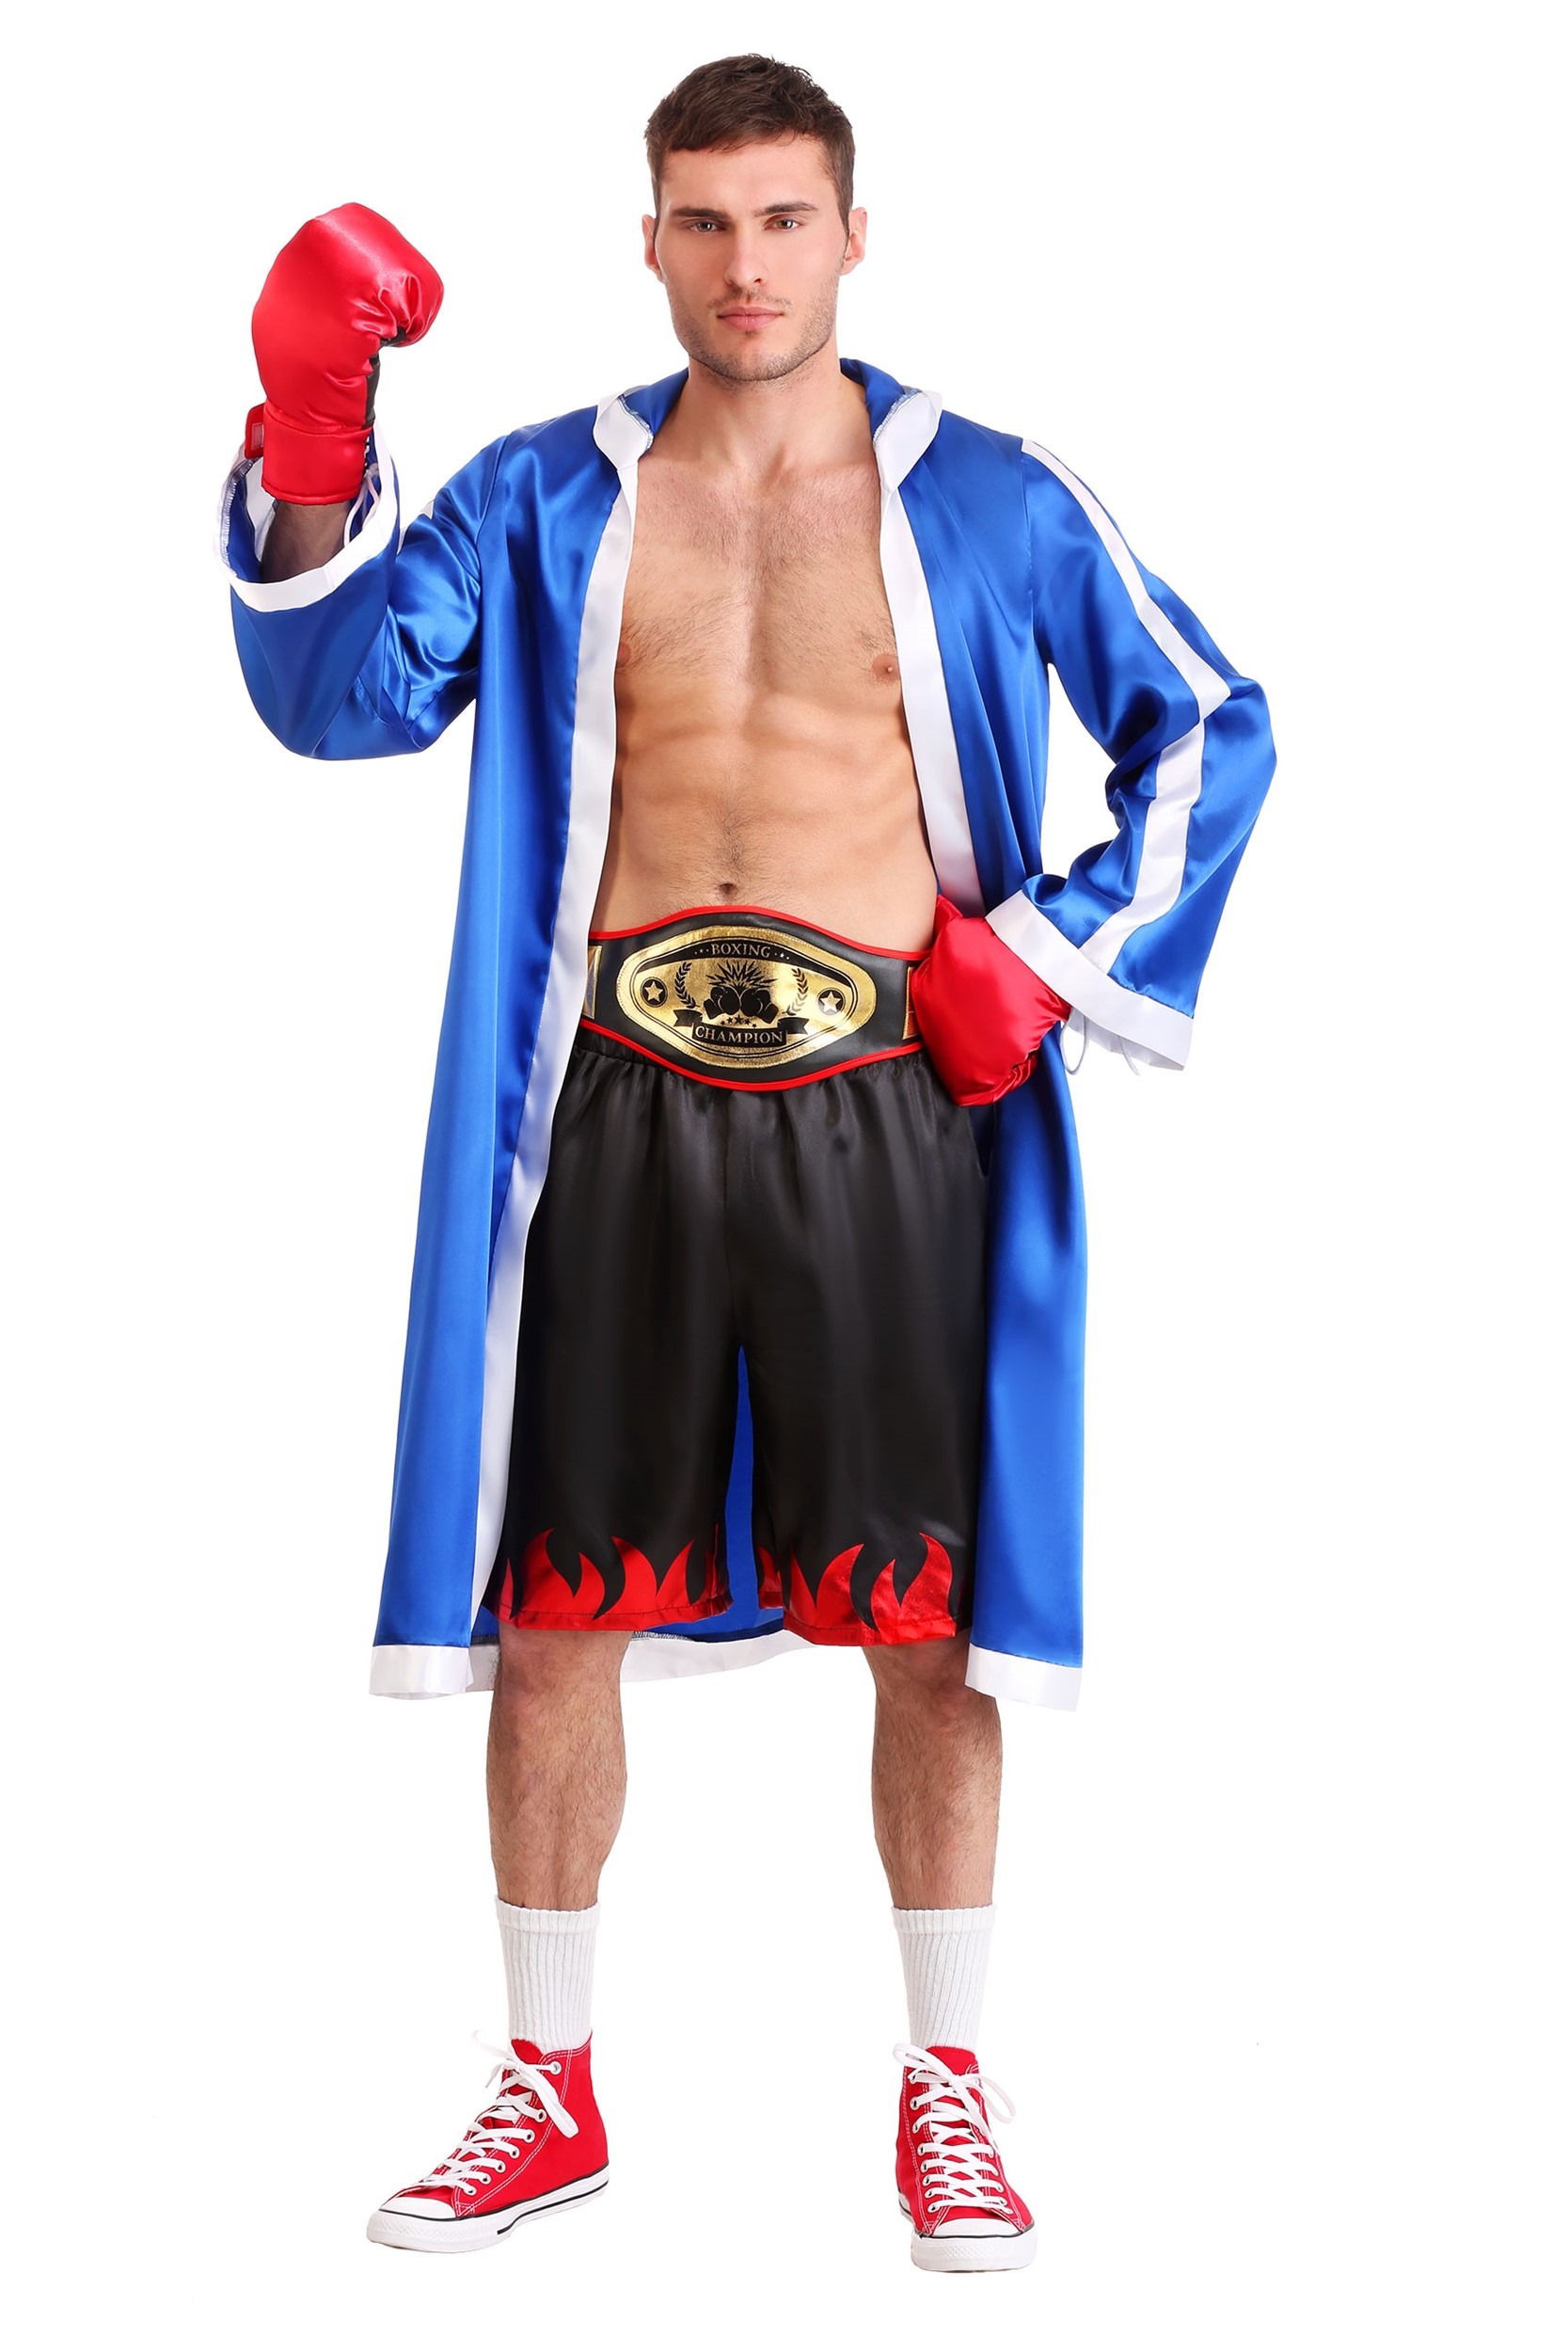 Boxer CHAMPION Costume Veste Pantalon Gants Boxer Costume Messieurs